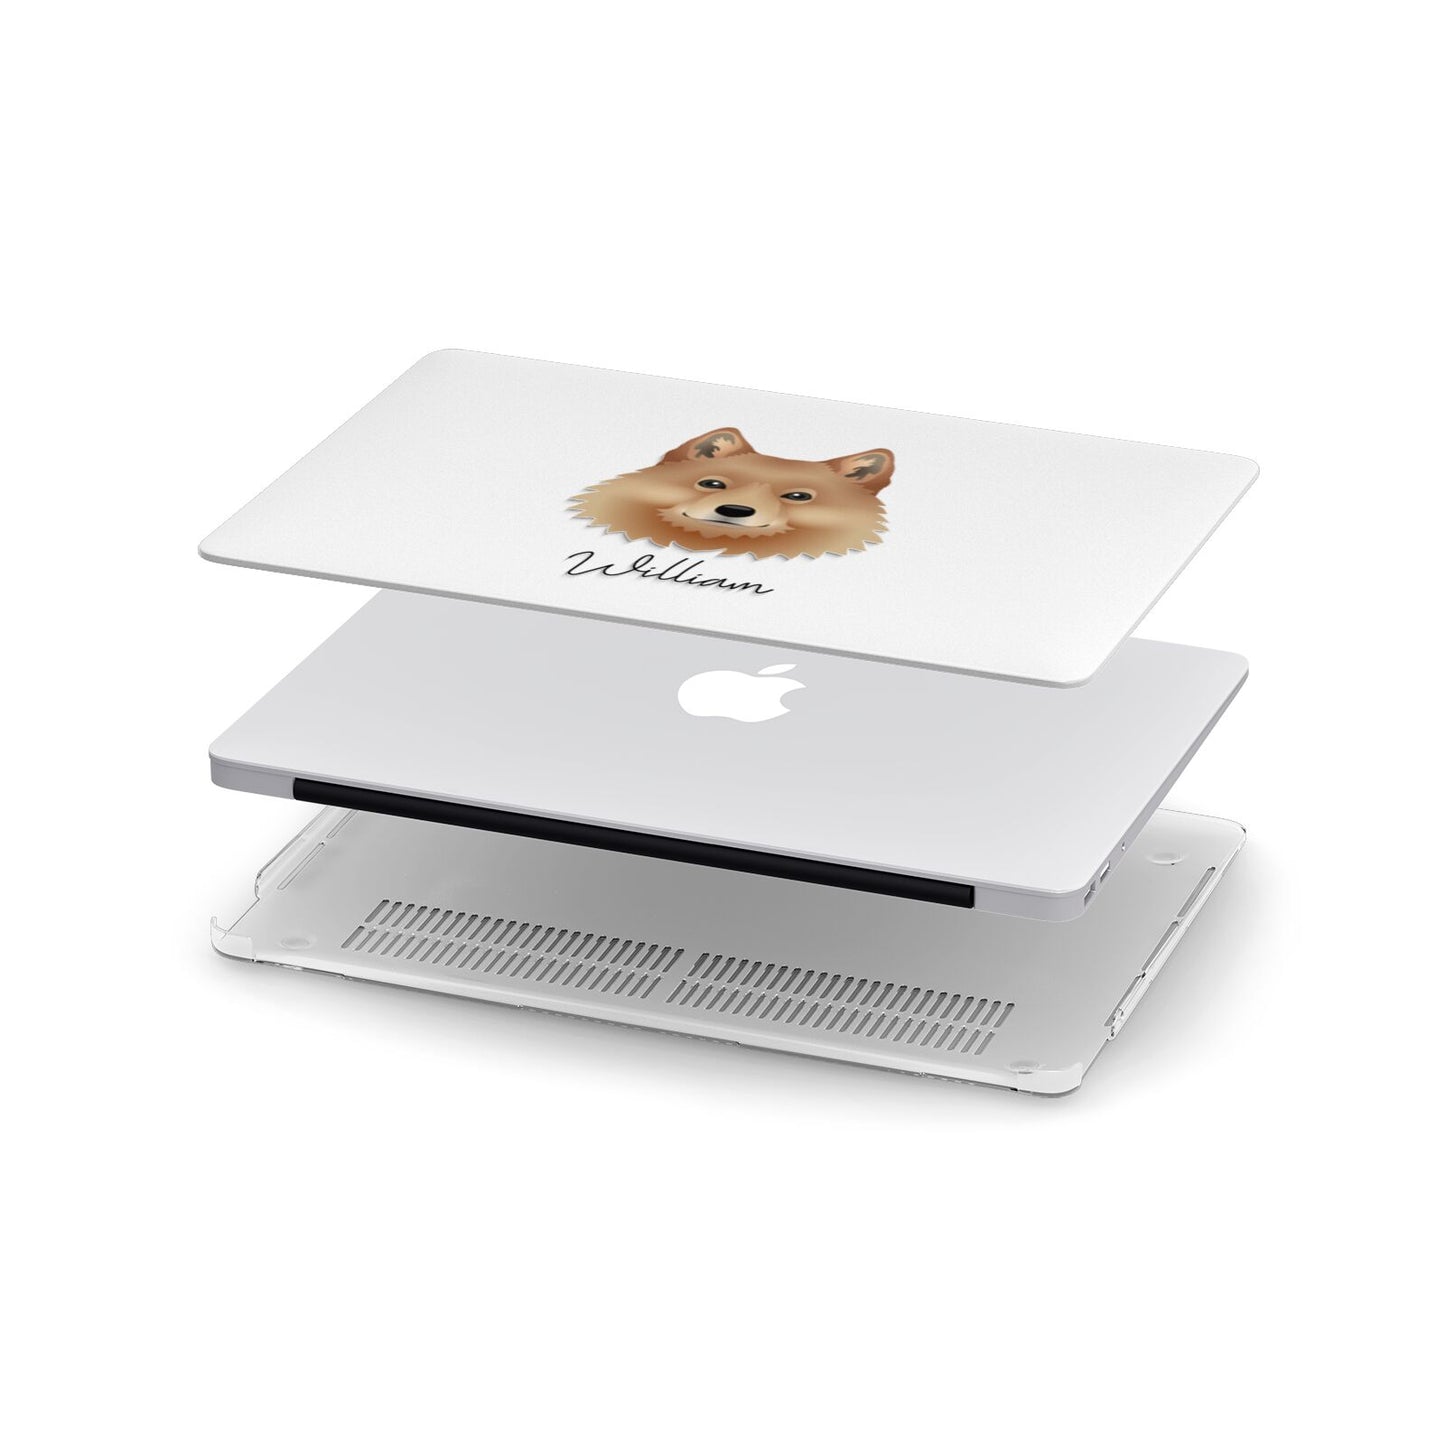 Finnish Spitz Personalised Apple MacBook Case in Detail